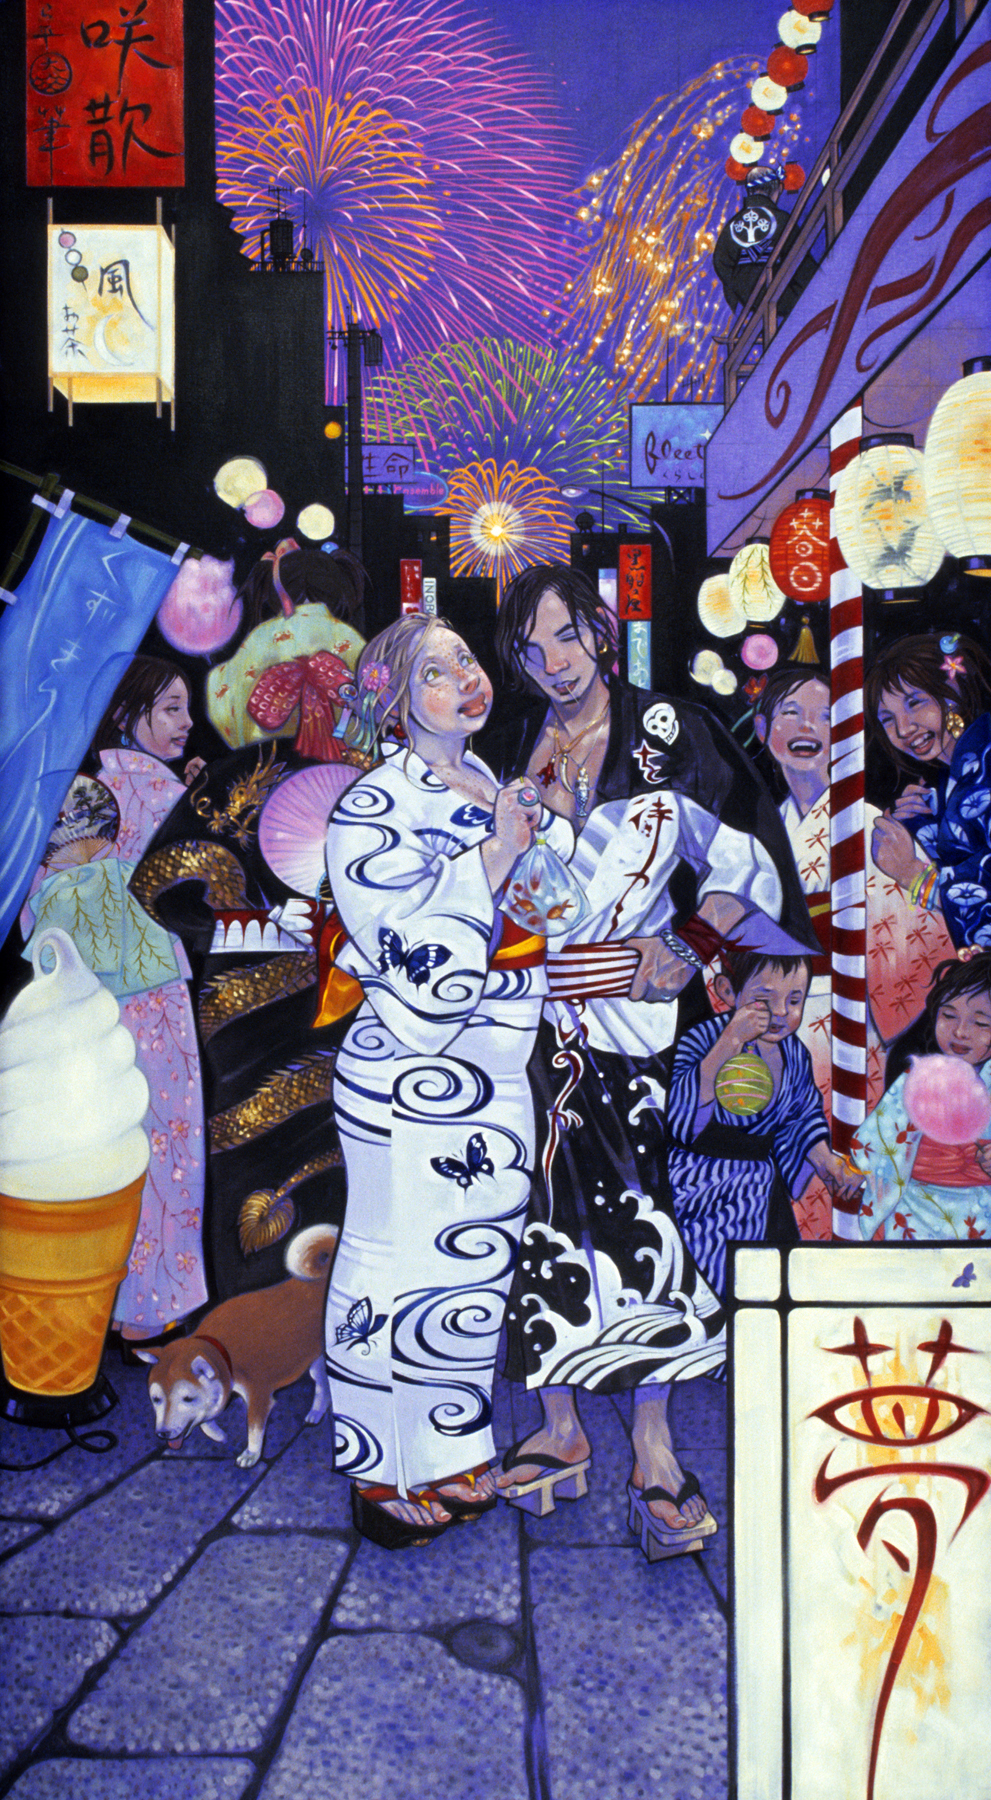 Shôsan (Bloom, Fade), 2006, oil on canvas, 84 x 46.5 inches, by Taiyo la Paix